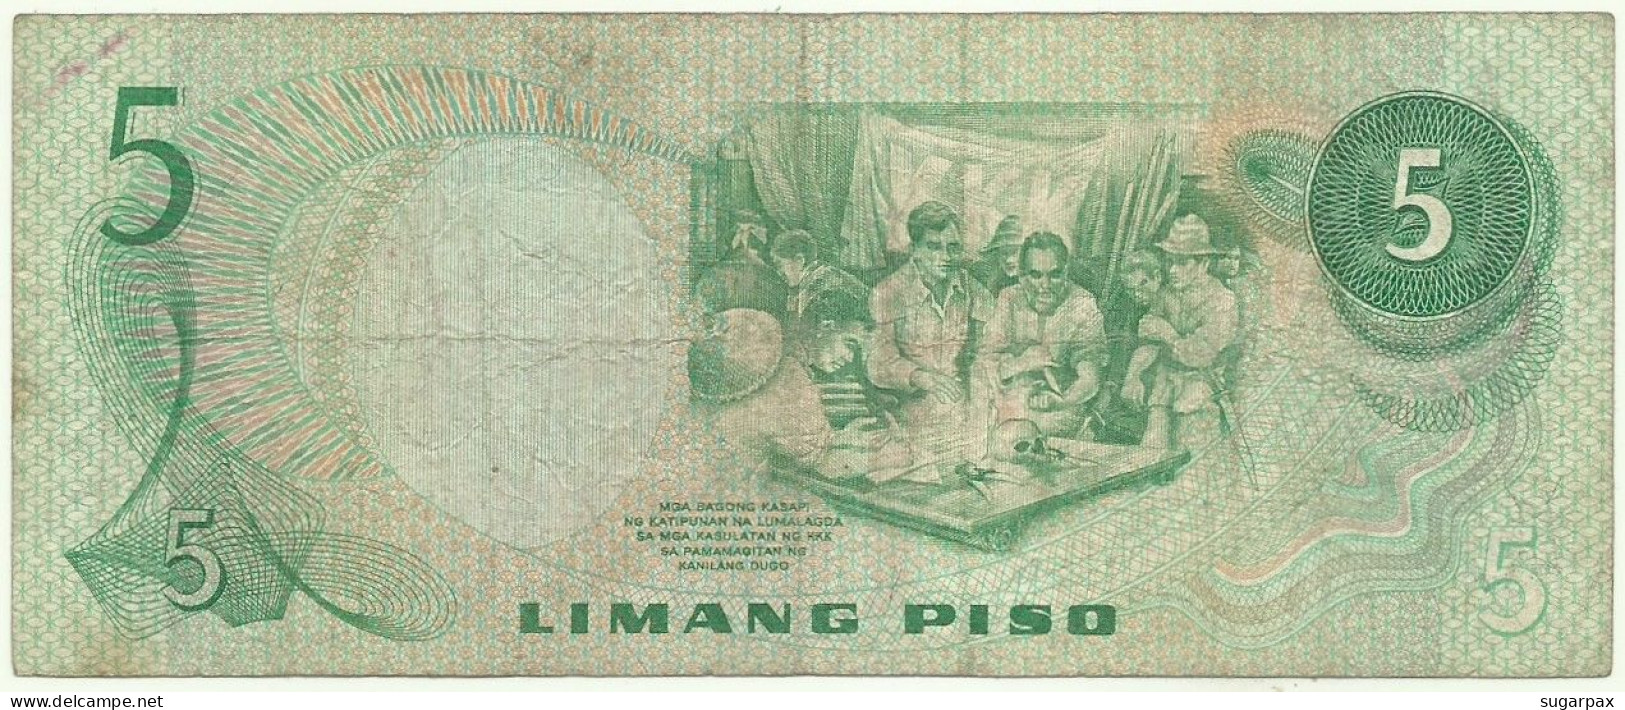 Philippines - 5 Piso - ND ( 1978 ) - Pick 160.a - Sign. 8 - Black Serial # RP - ANG BAGONG LIPUNAN - Philippines